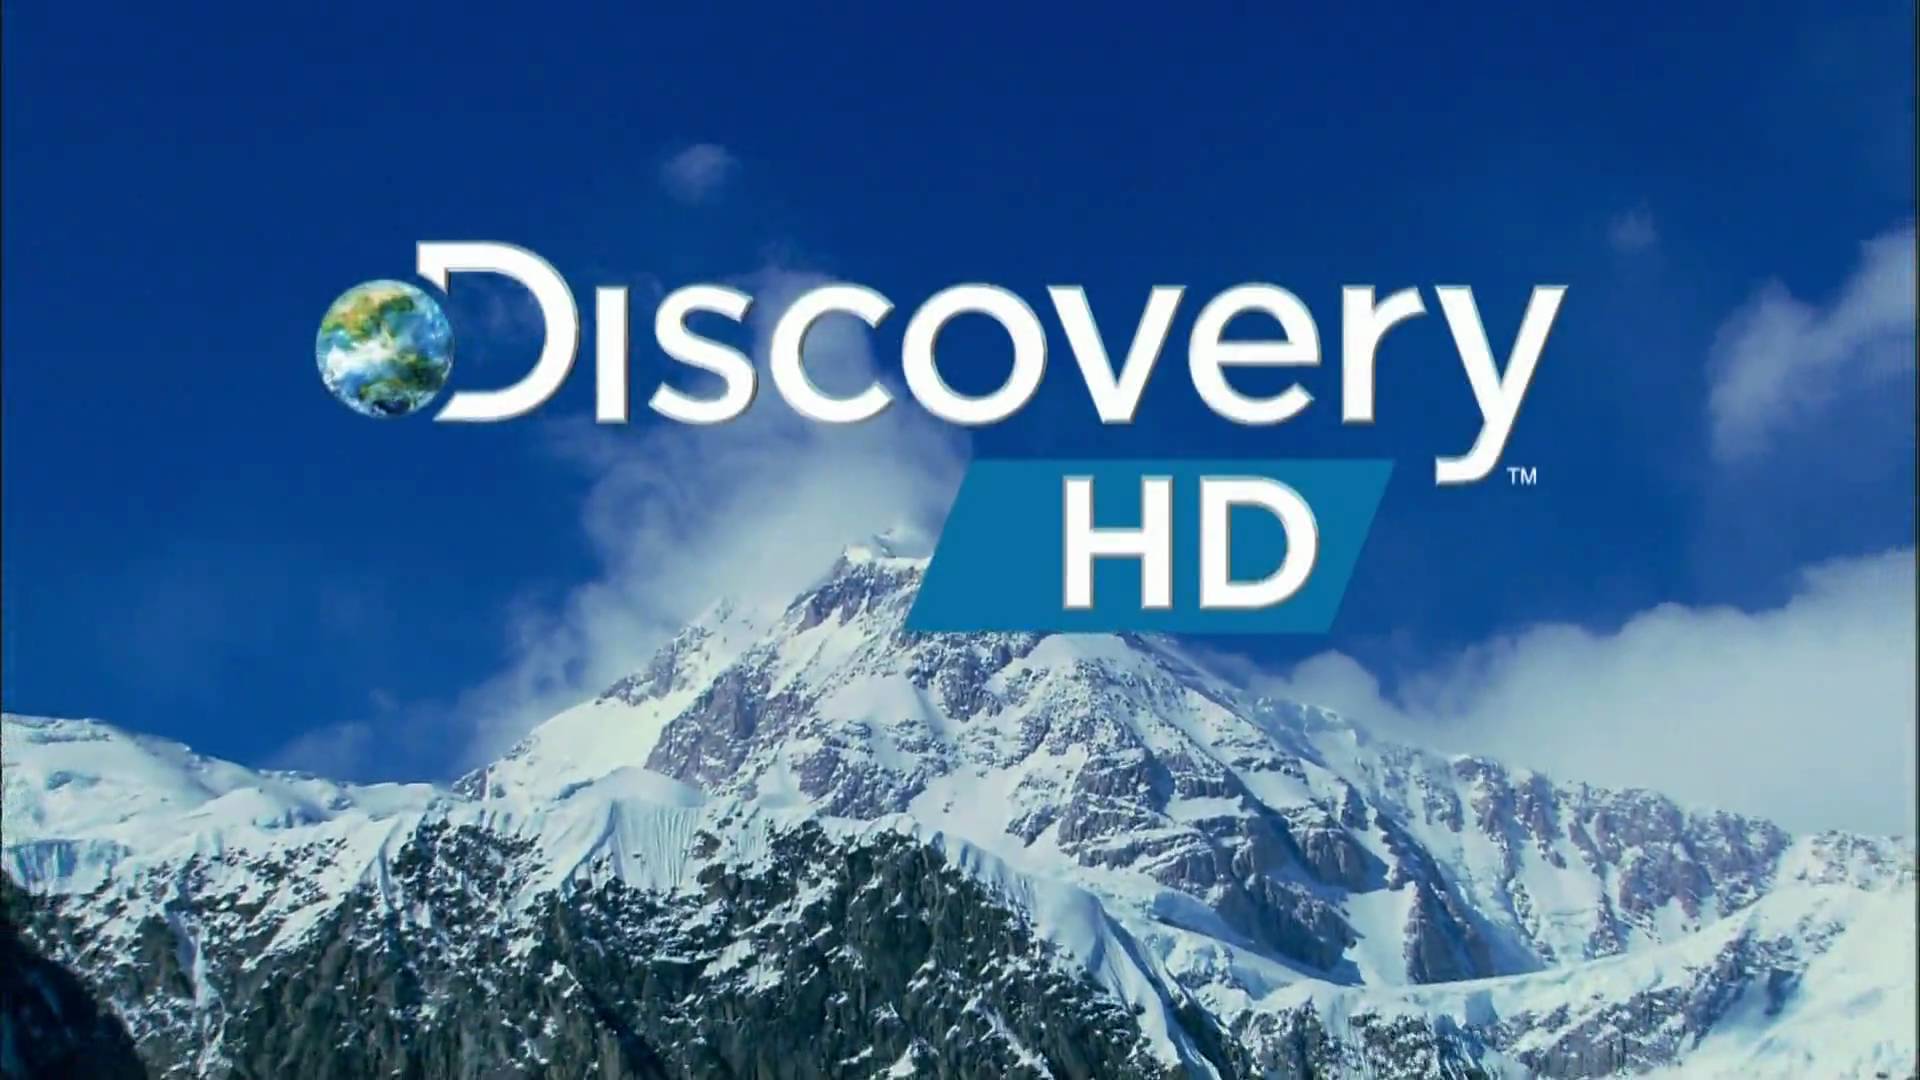 Дискавери отключен. Discovery channel. Телеканал Discovery. Дискавери логотип. Дискавери заставка.